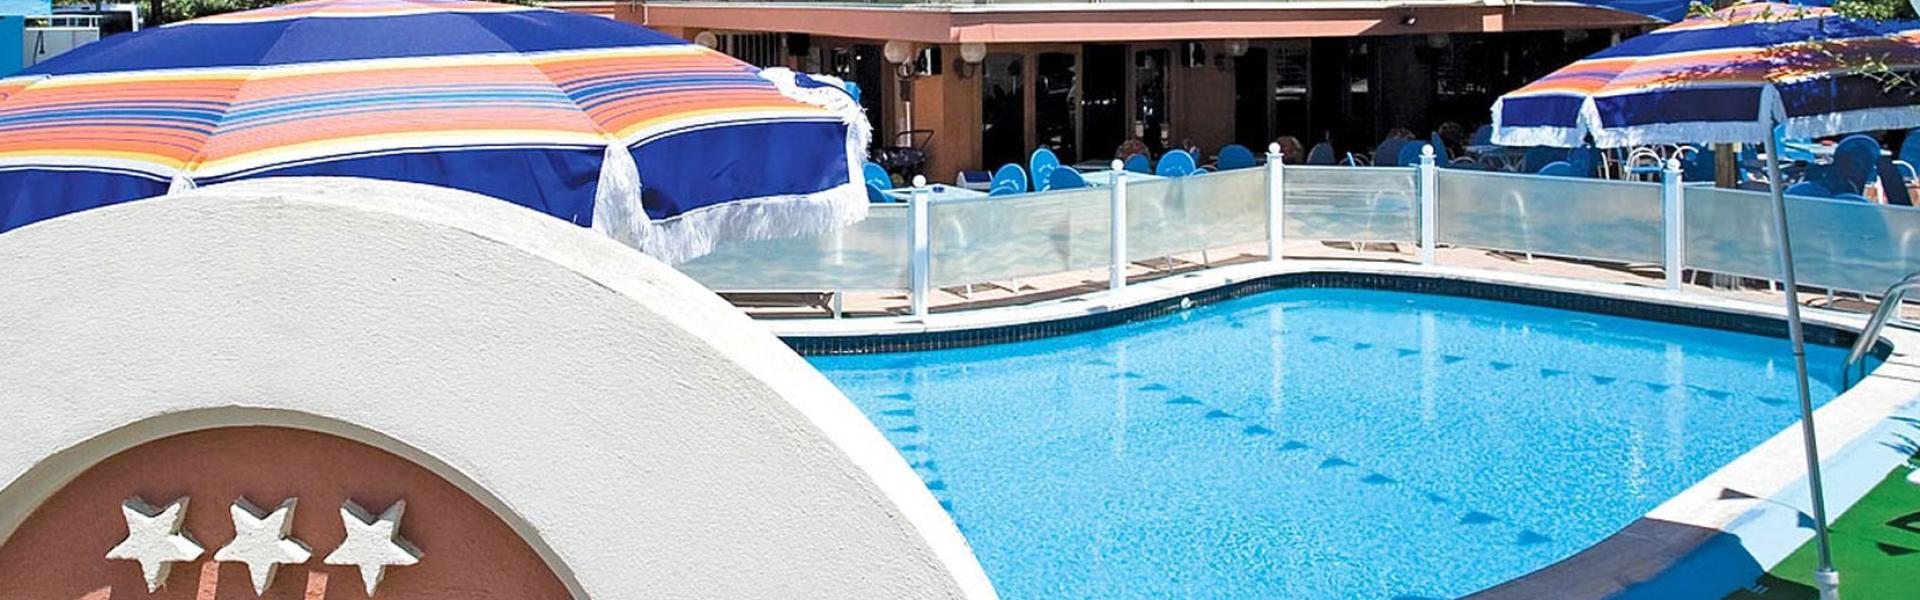 hotelzenith.unionhotels it piscina-cervia-hotel-zenith 003